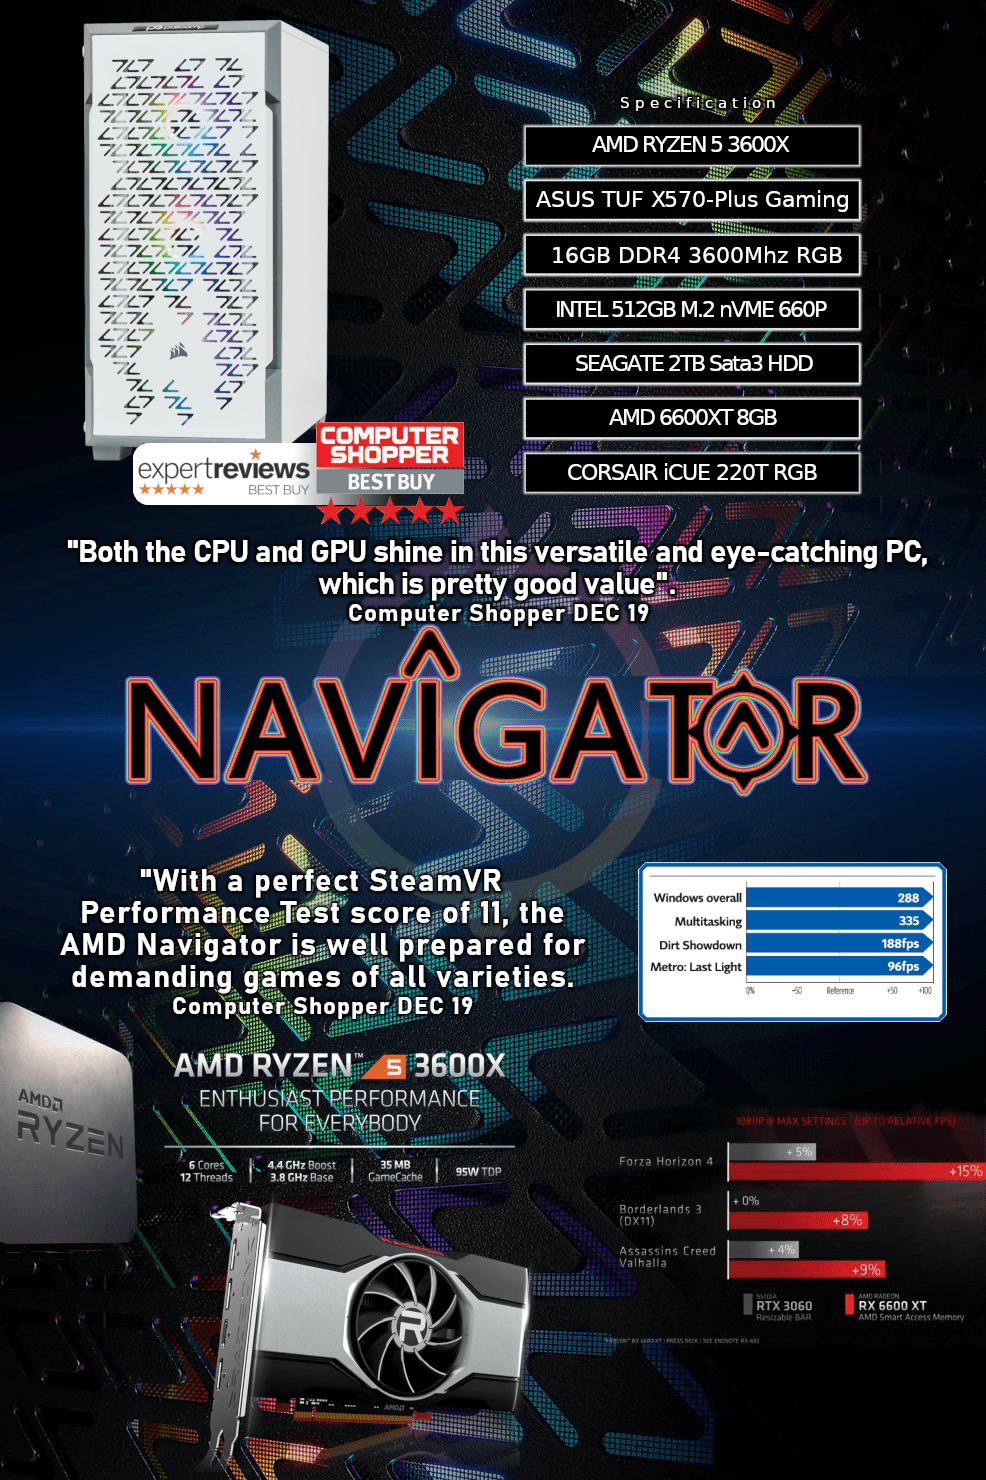 AMD Navigator